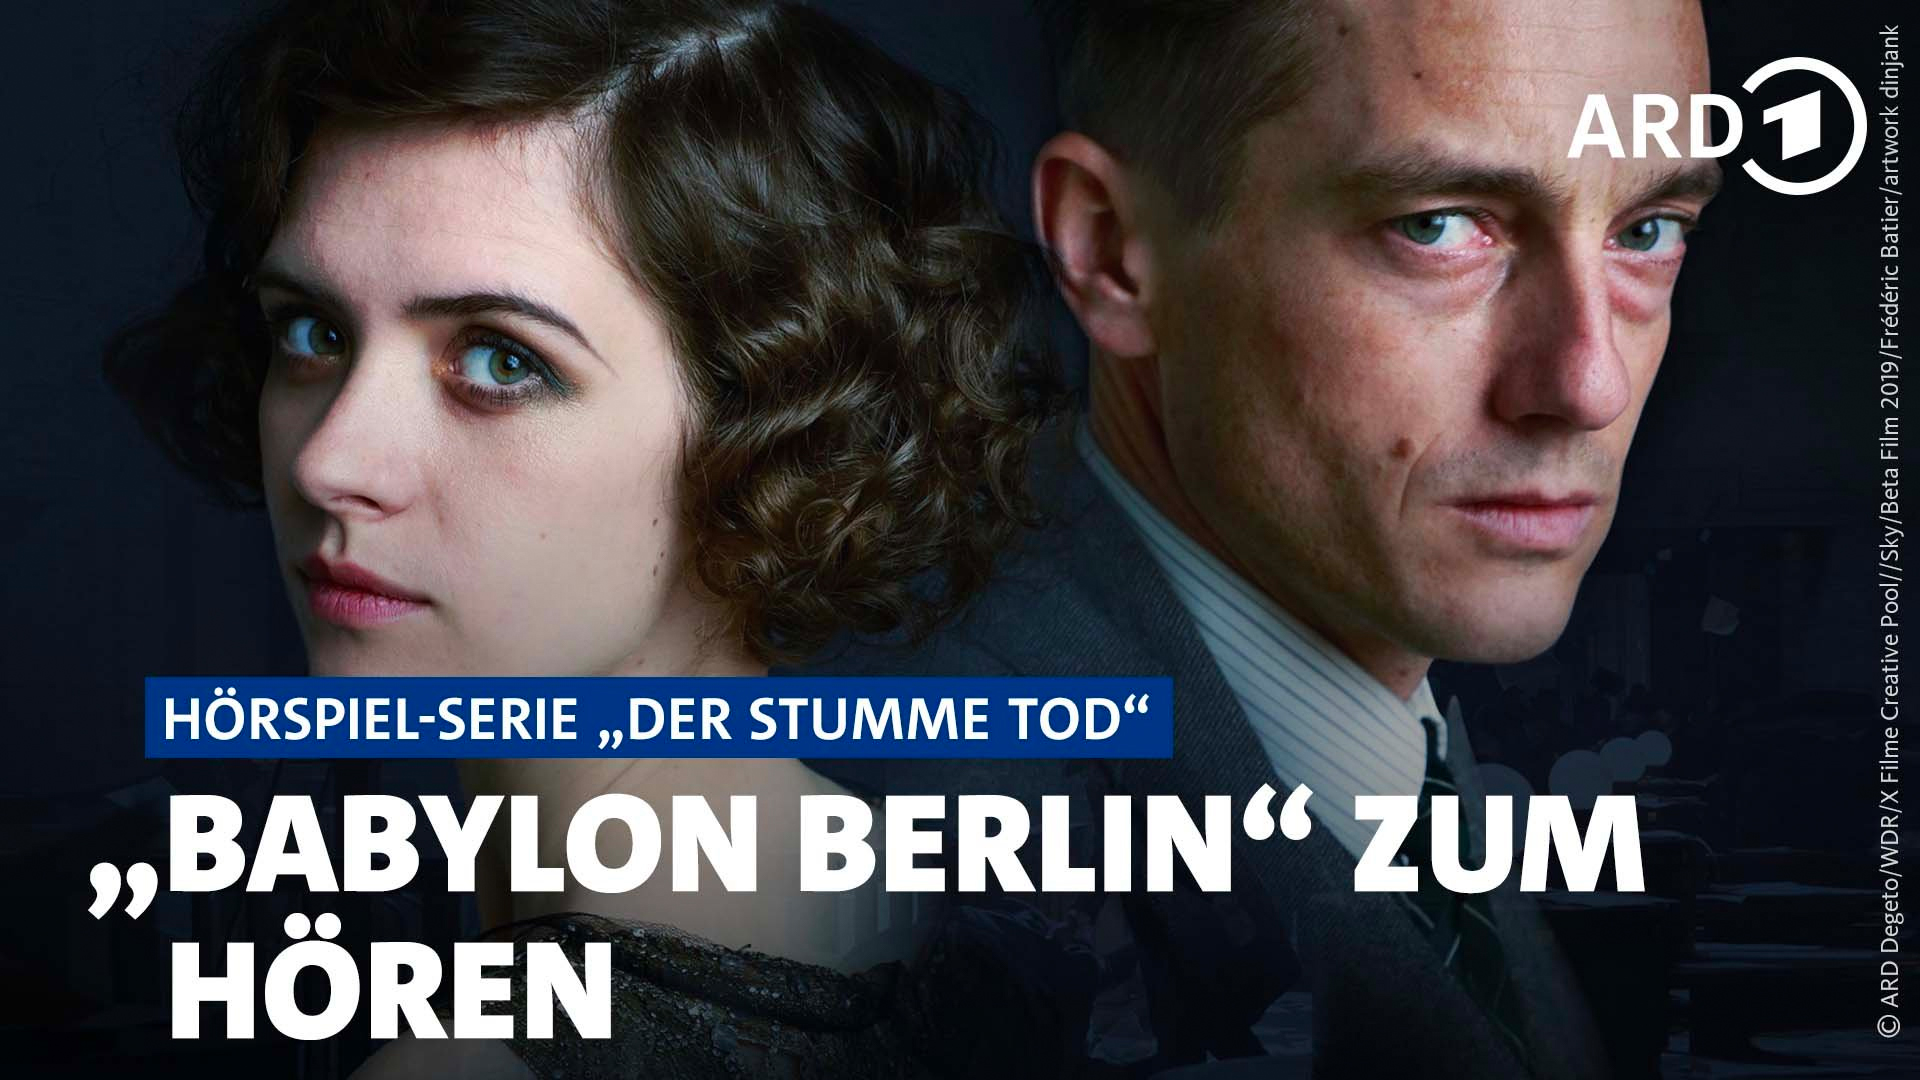 Der stumme Tod, Hörspiel zur 3. Staffel Babylon Berlin © ARD Degeto / WDR / X-Filme Creative Pool / Sky / Beta Film 2019 / Frederic Batier / artwork dinjank